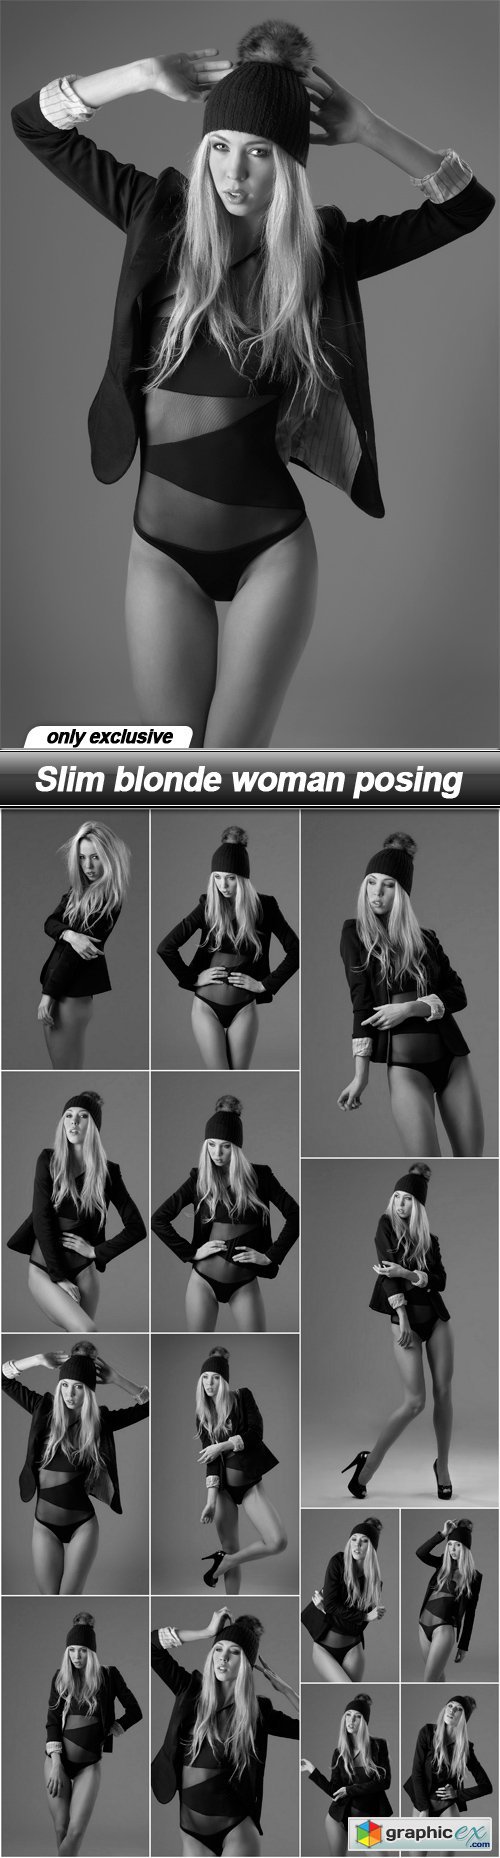 Slim blonde woman posing - 14 UHQ JPEG